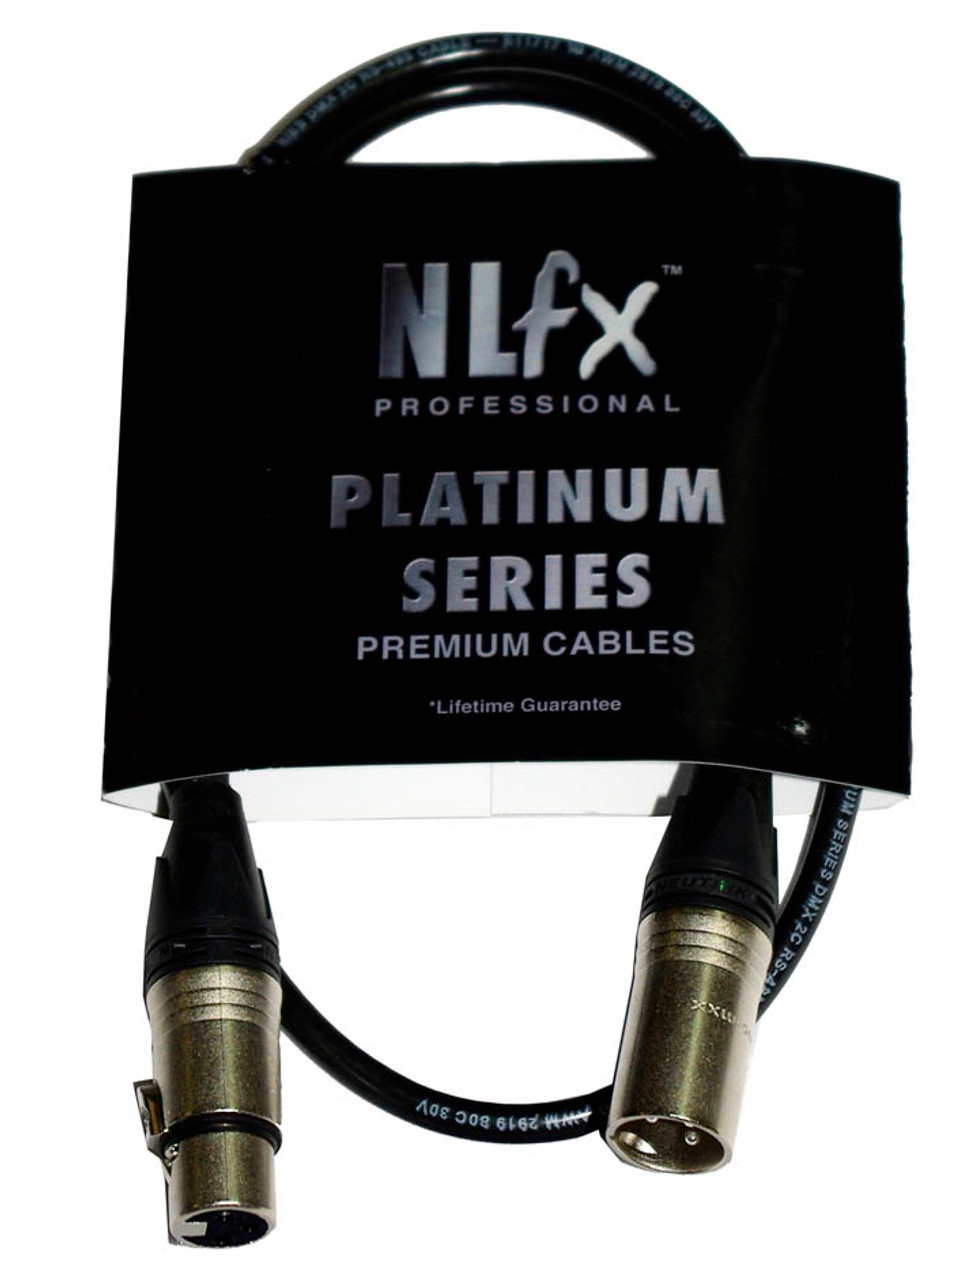 Pro Audio - Mixers - Personal mixer - NLFX Professional